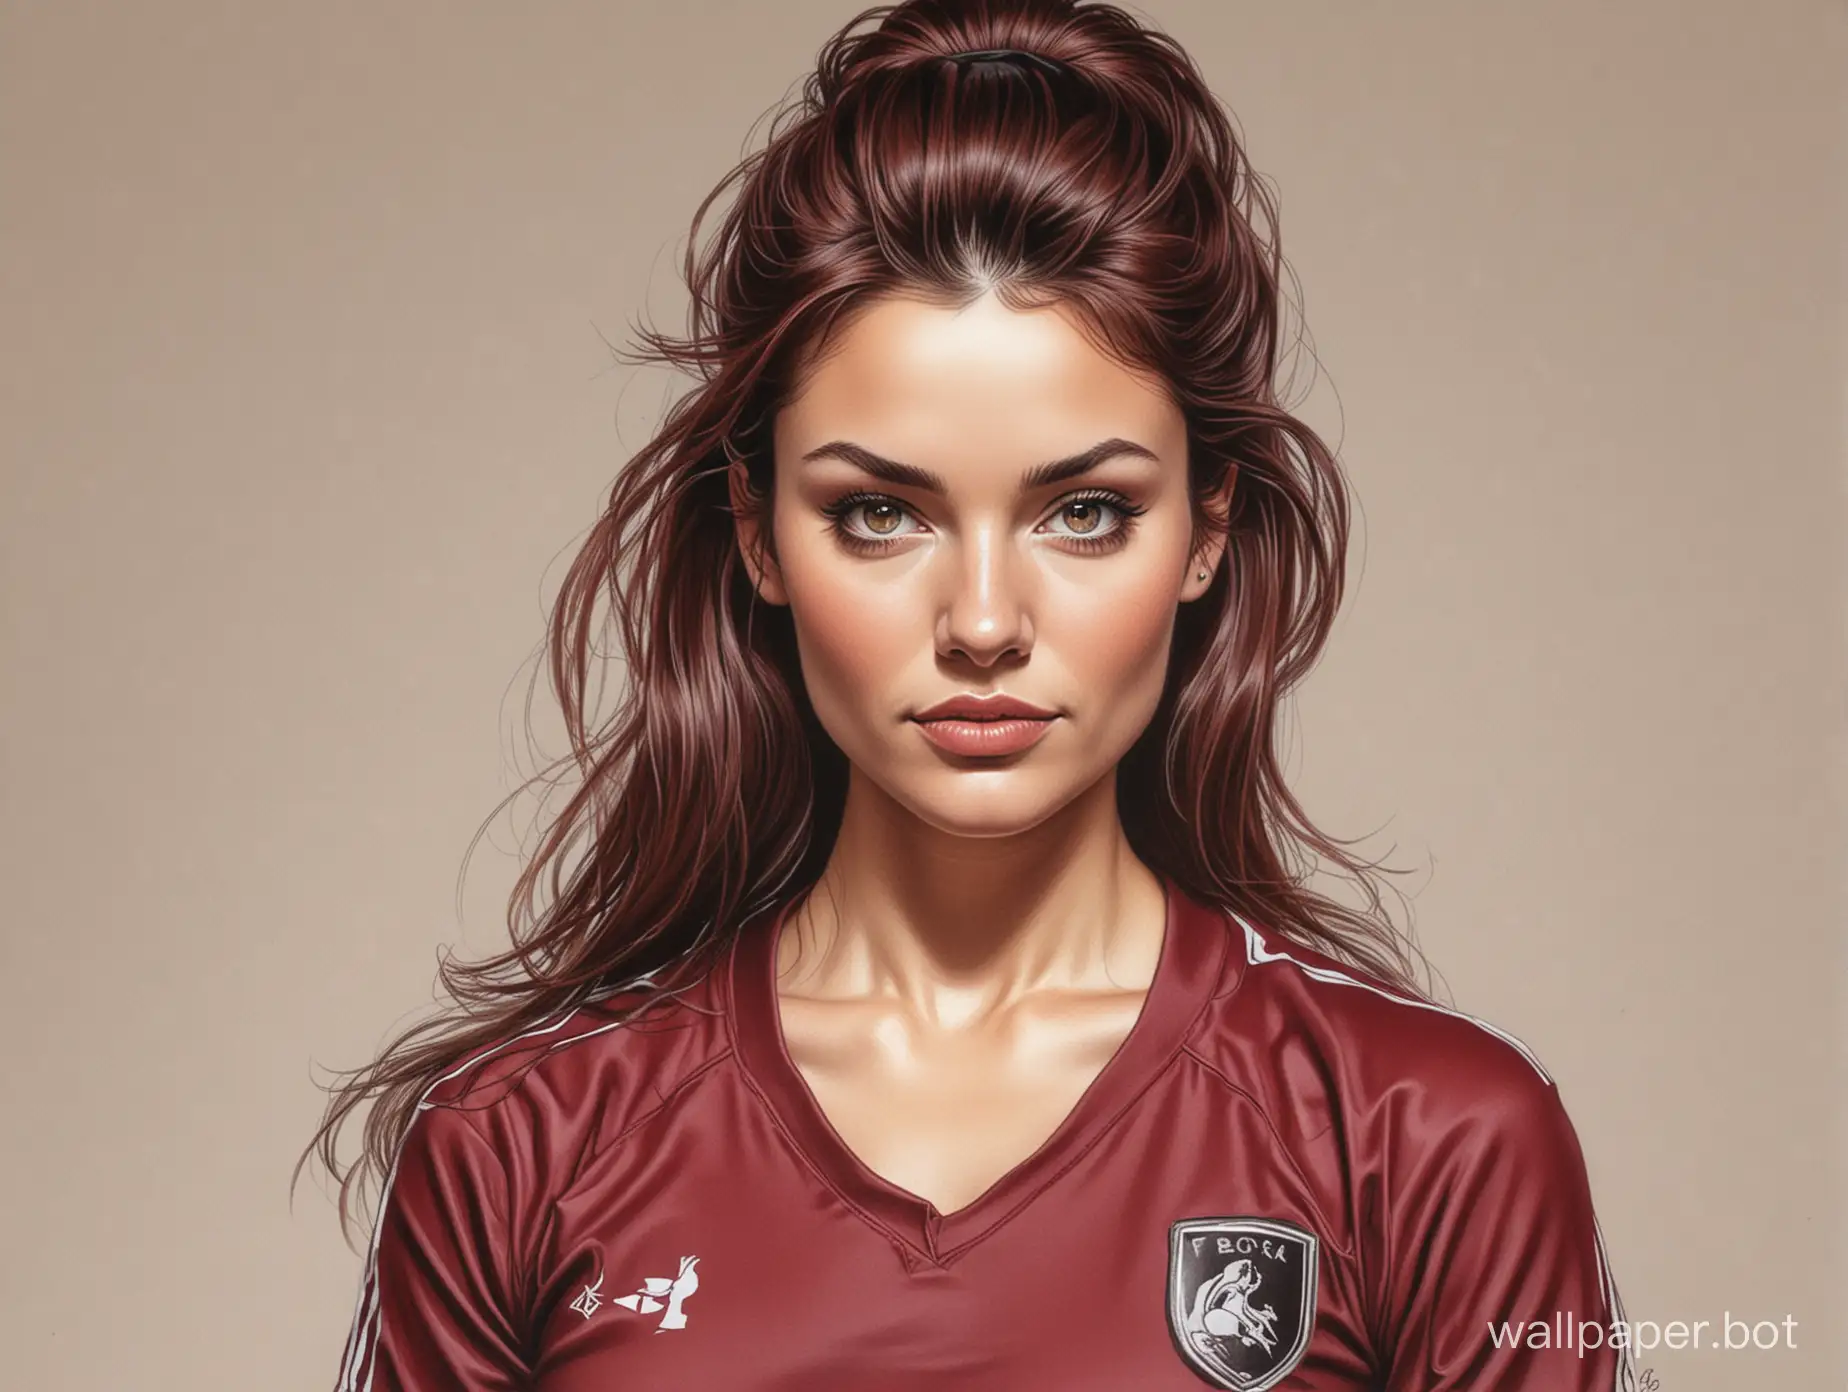 Victoria-Clough-Portrait-in-BlackBurgundy-Soccer-Uniform